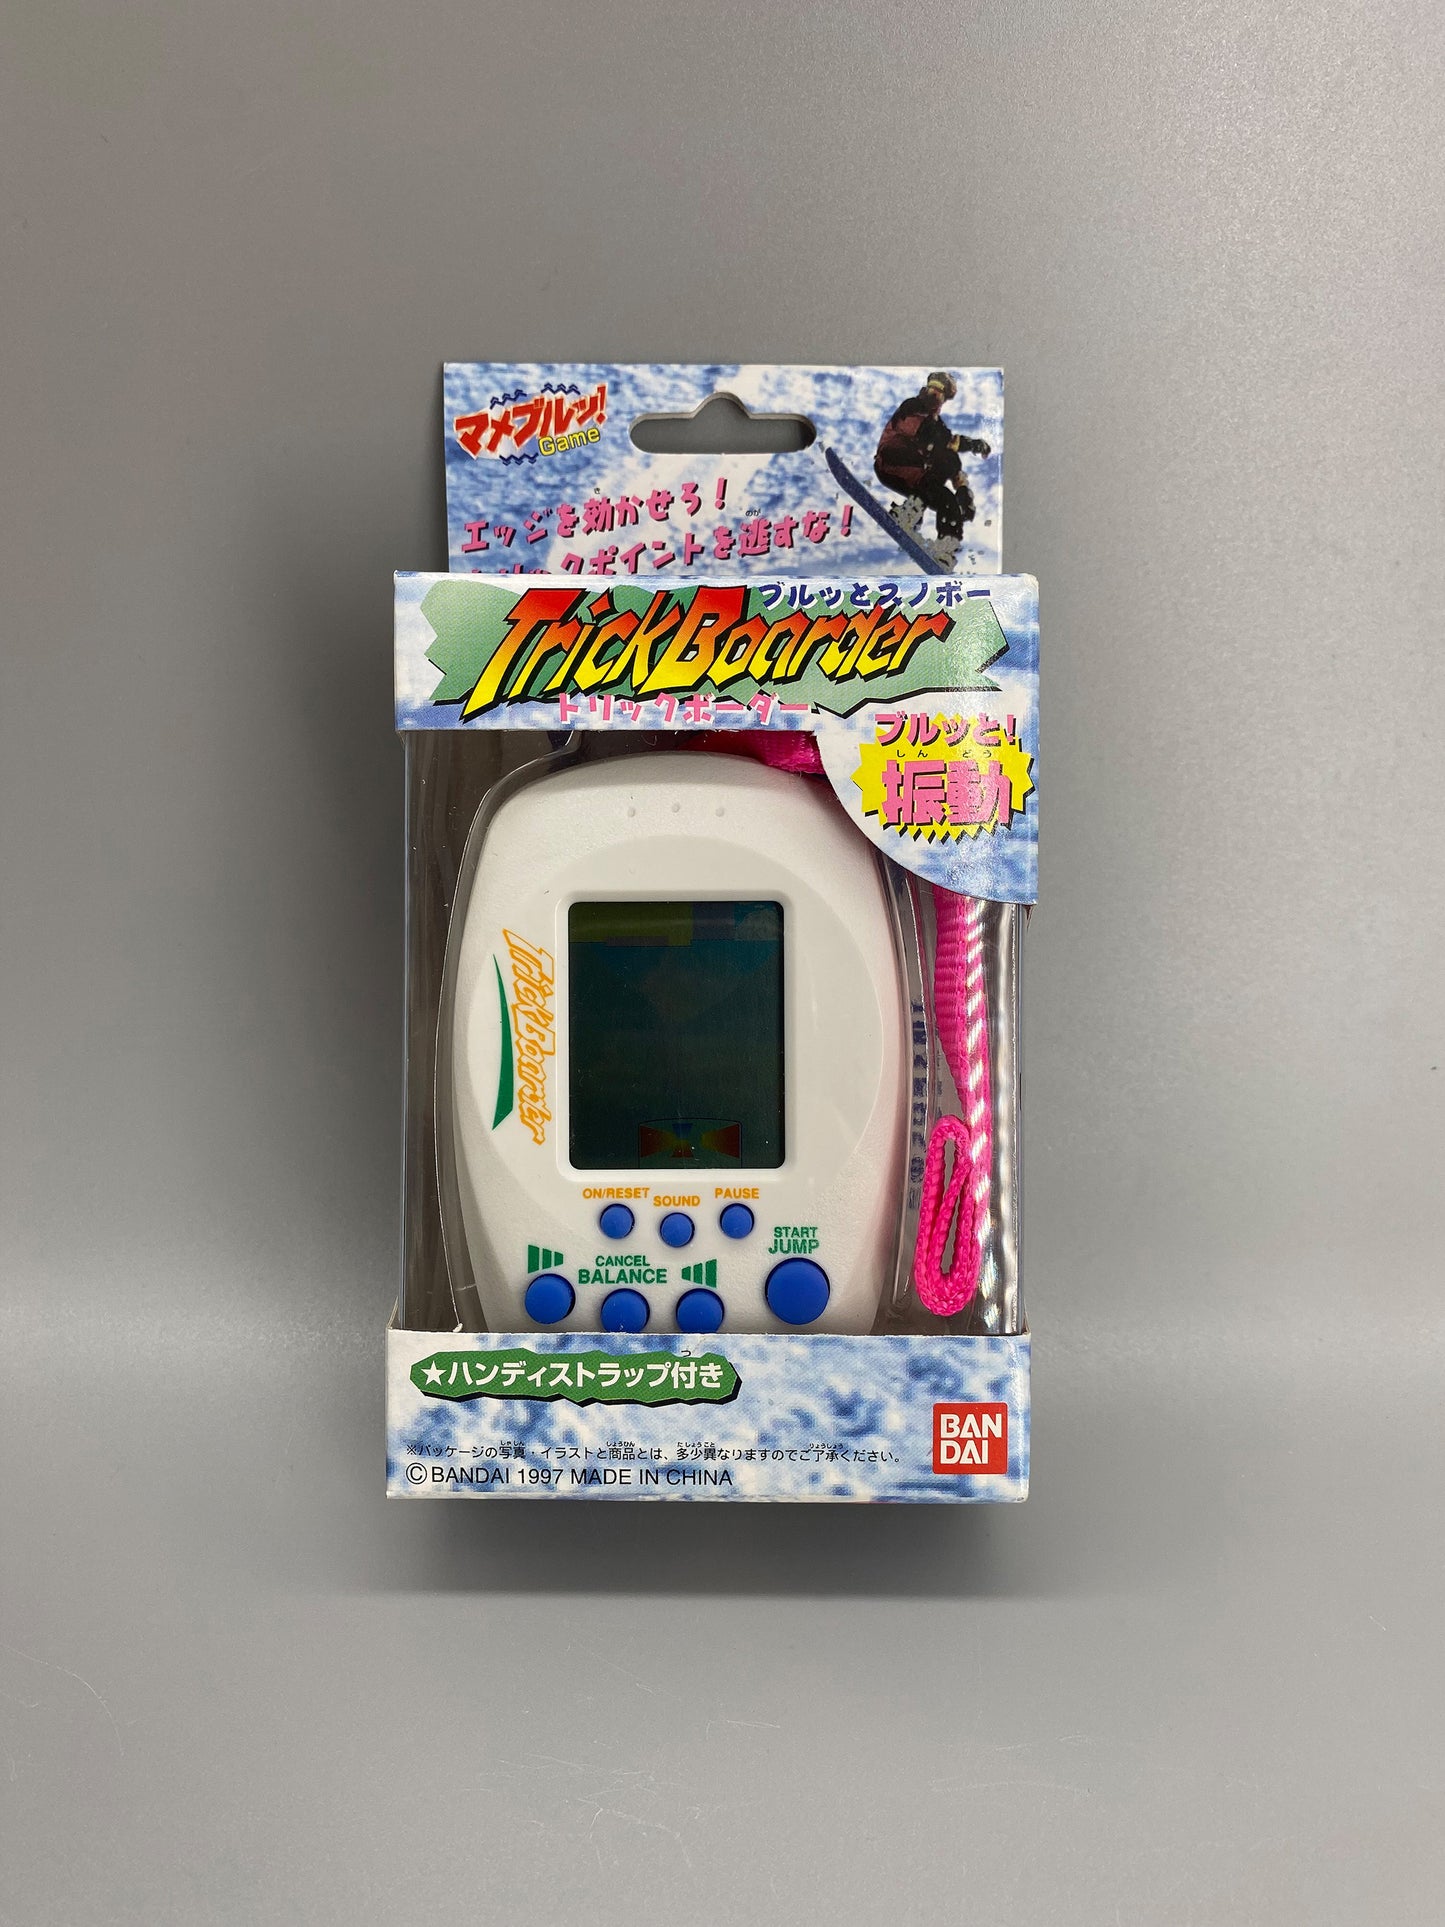 Bandai TrickBoarder handheld Mame Game 遊戲機